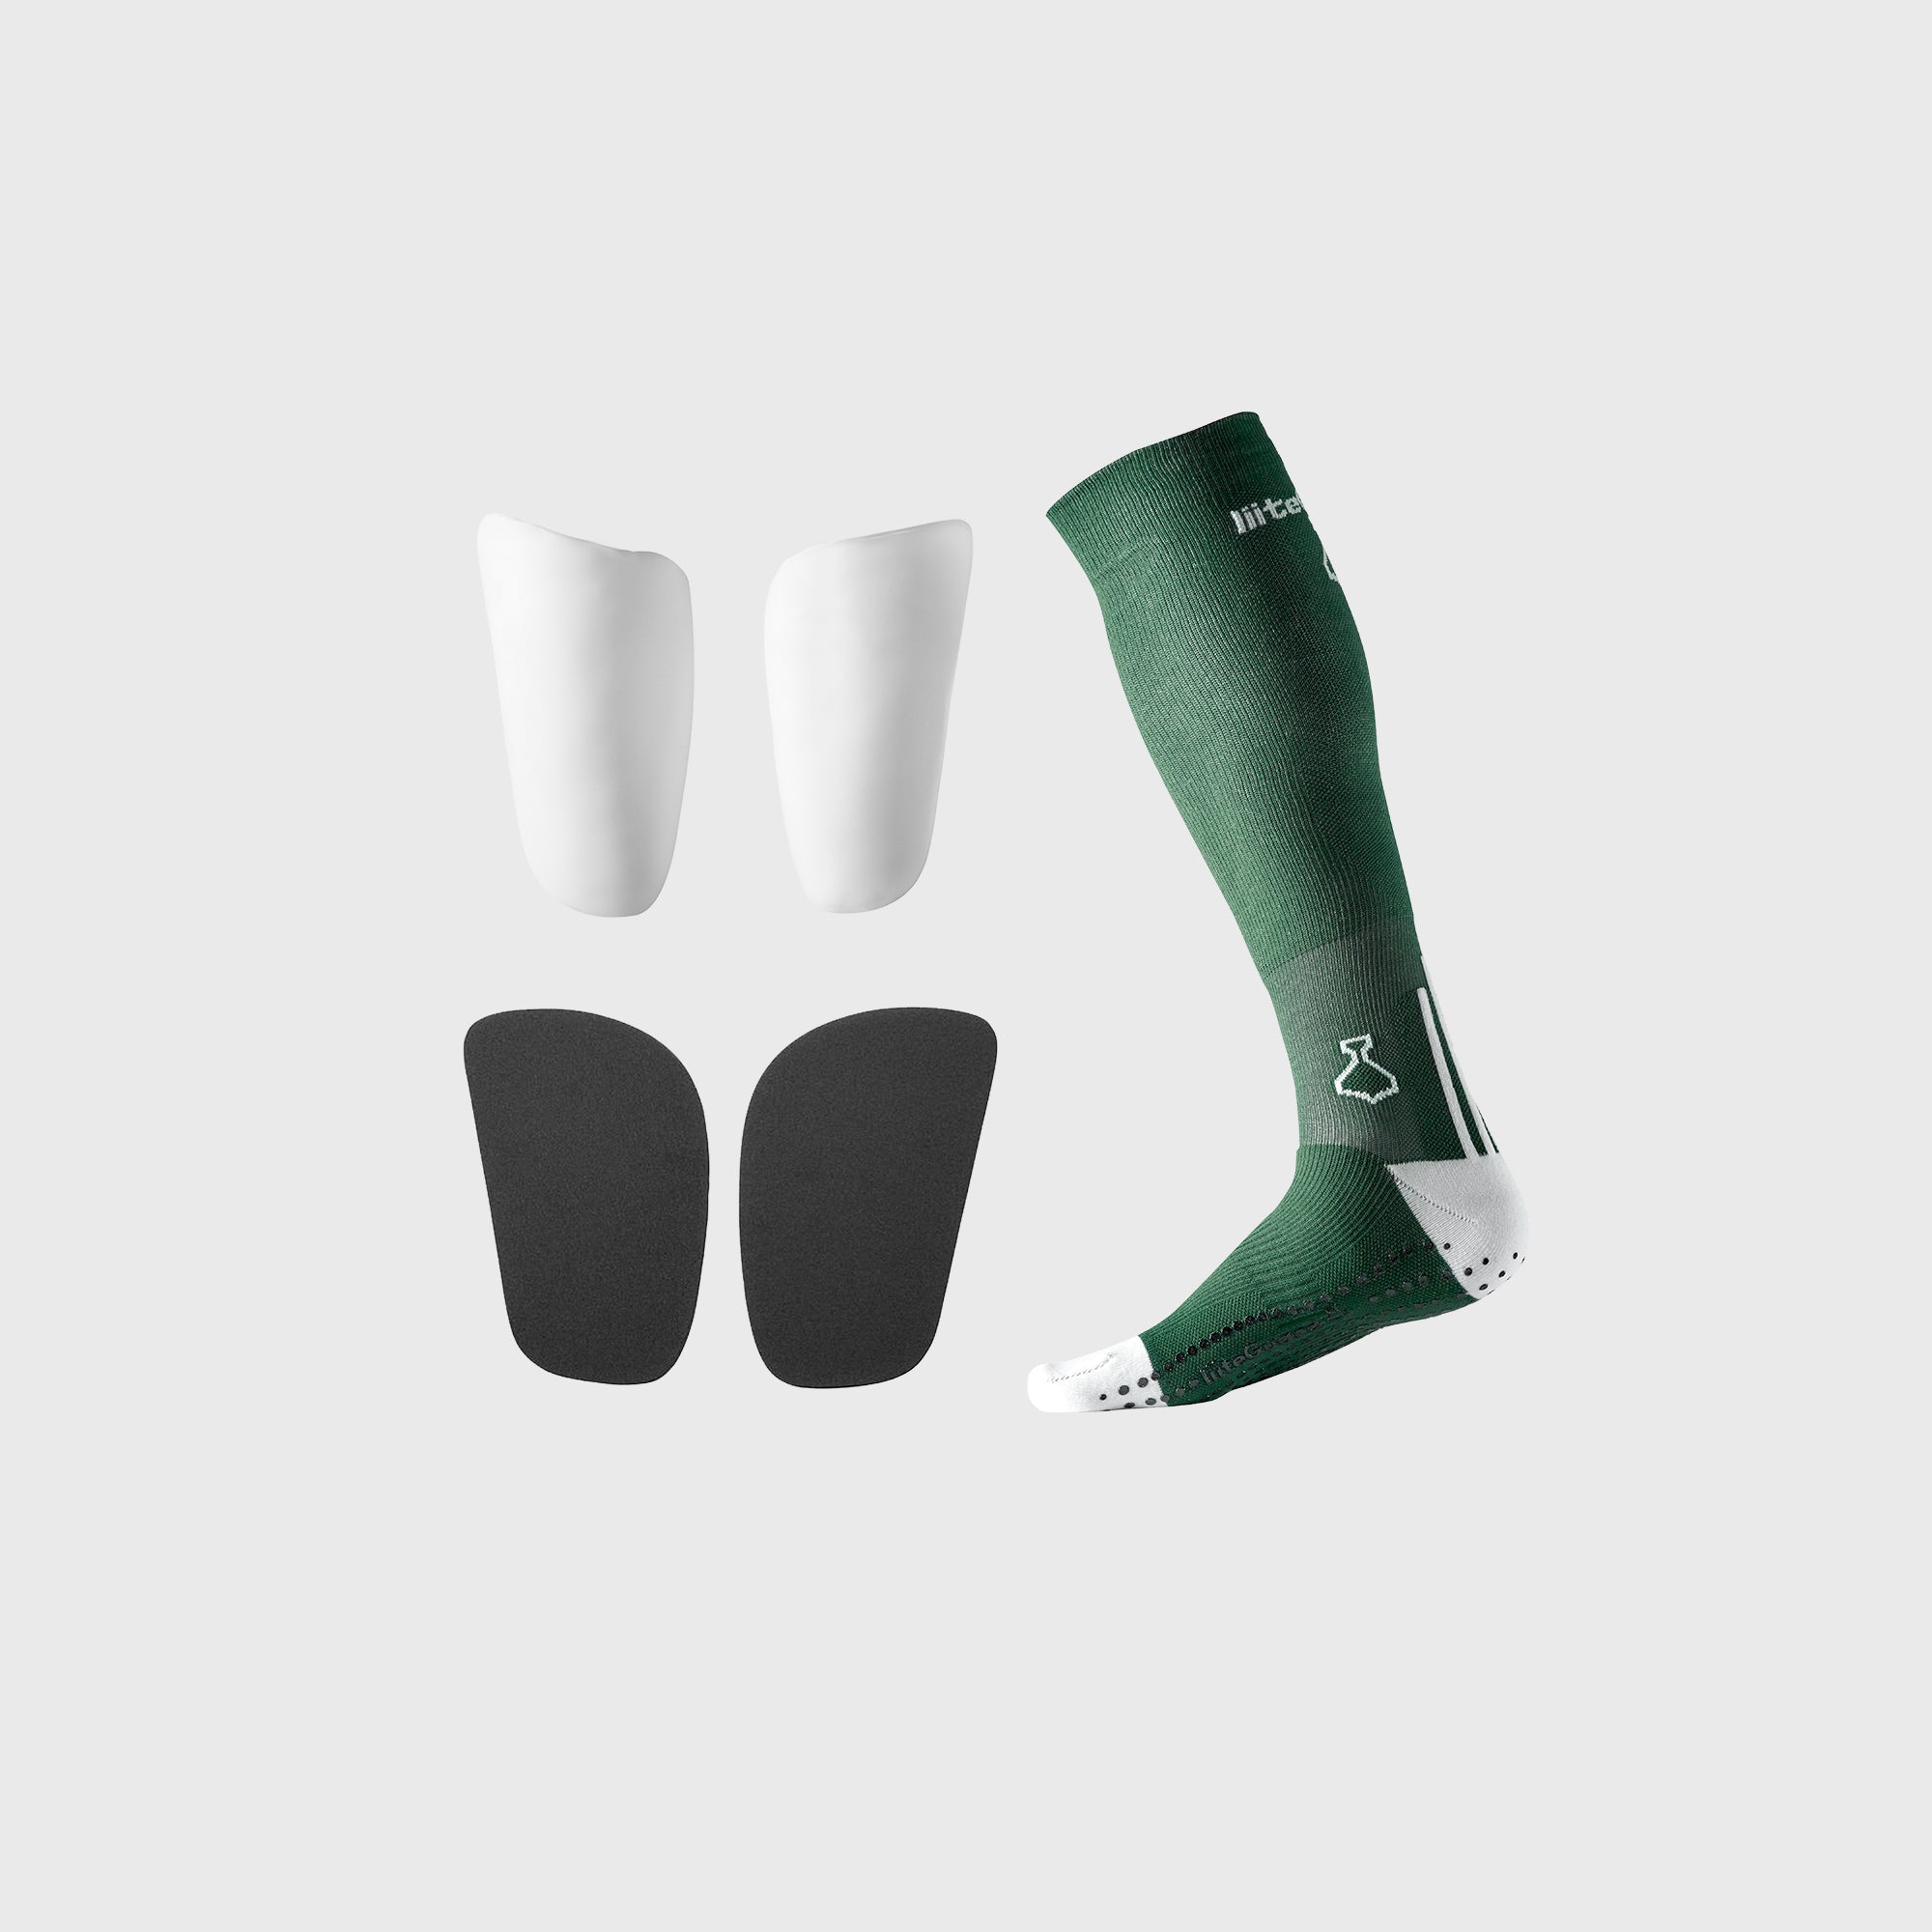 Liiteguard PERFORMANCE KIT Long socks DARK GREEN